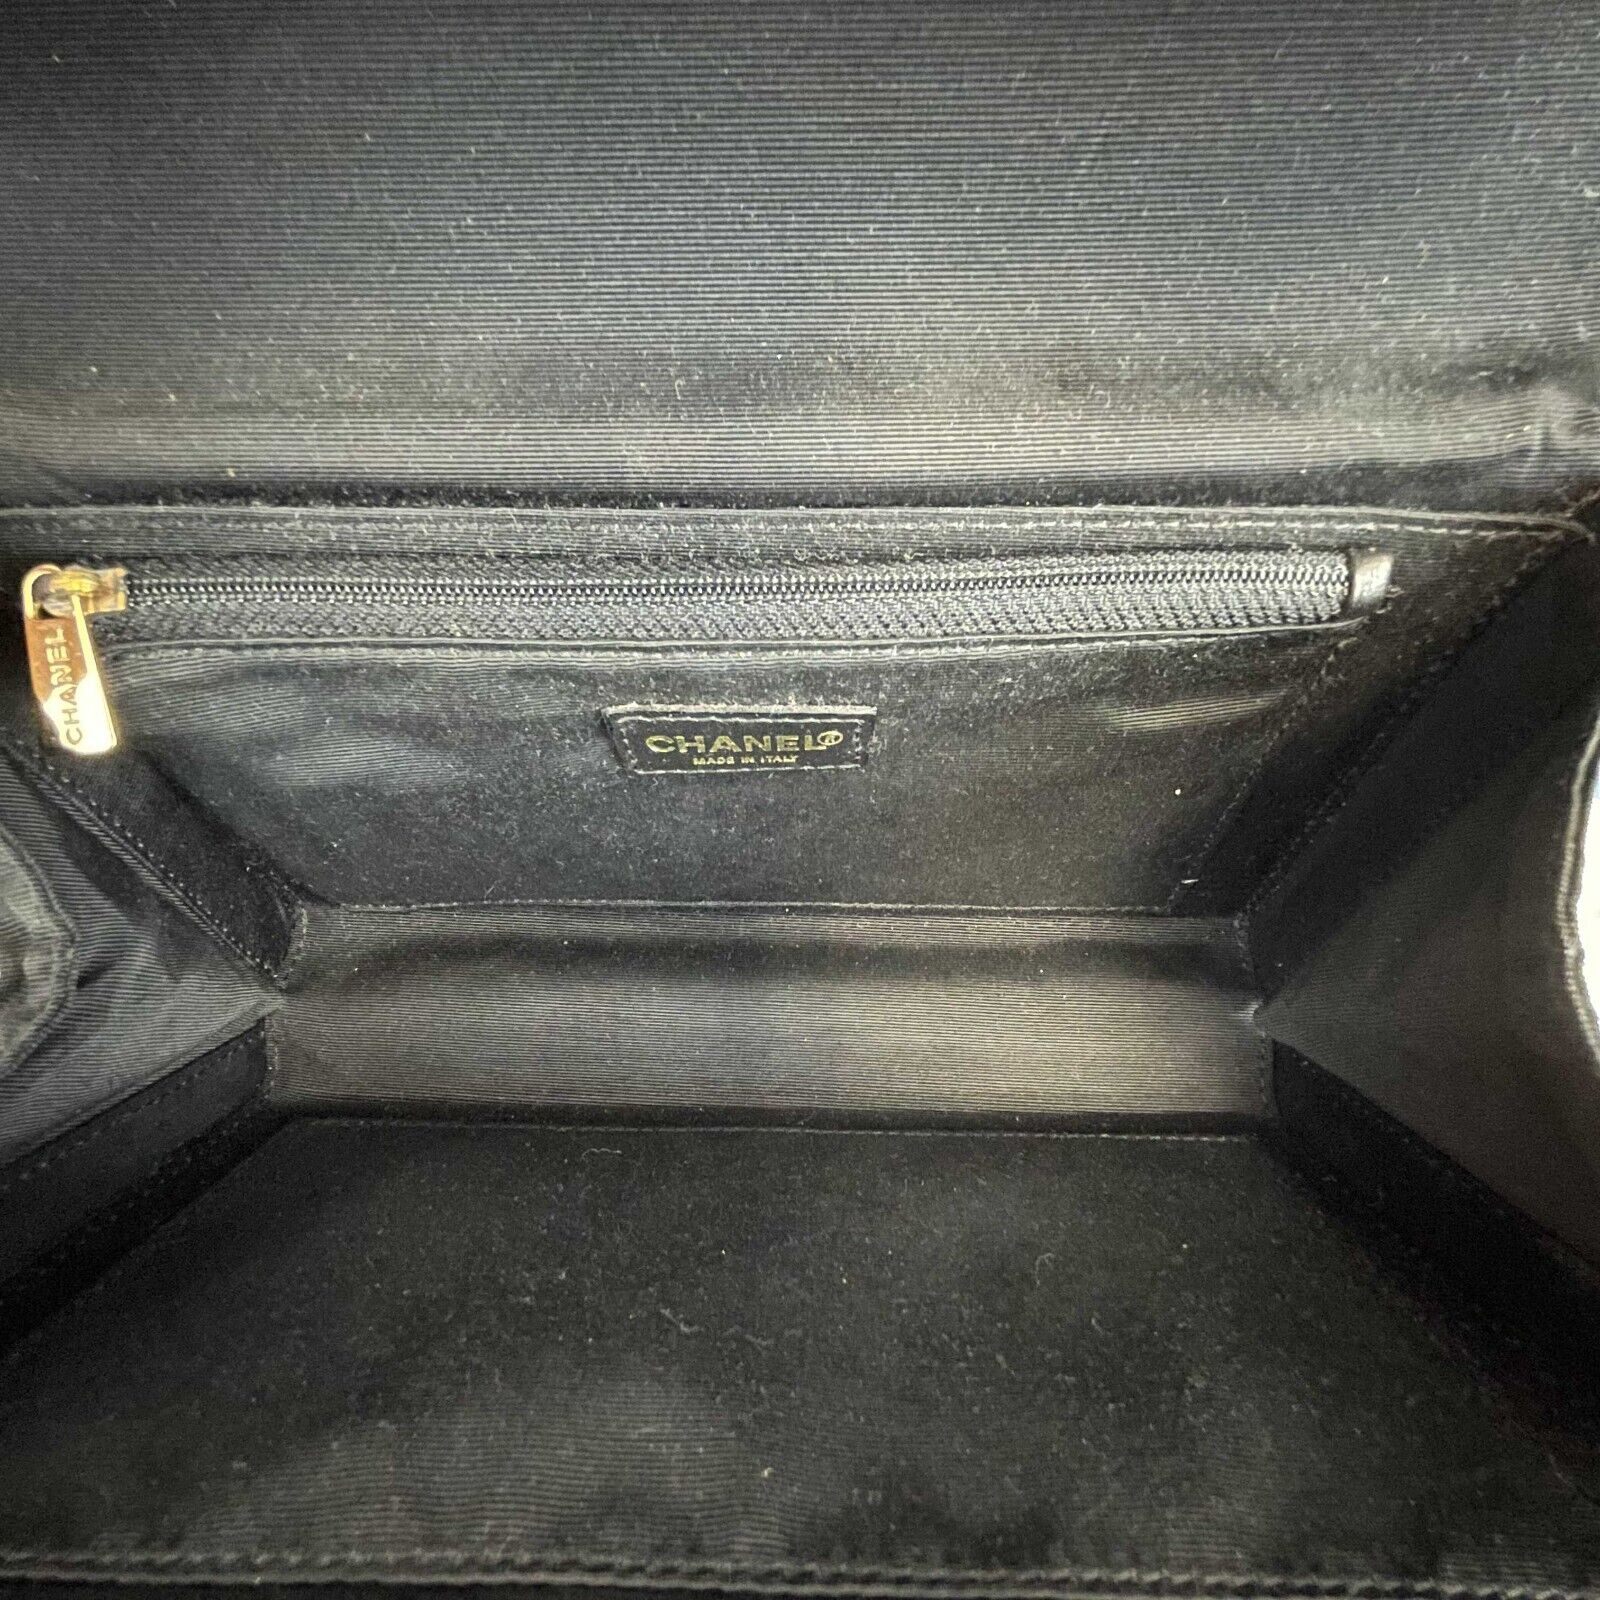 Chanel Handbag Boy Enchained Medium Chain Flap 234201 Black